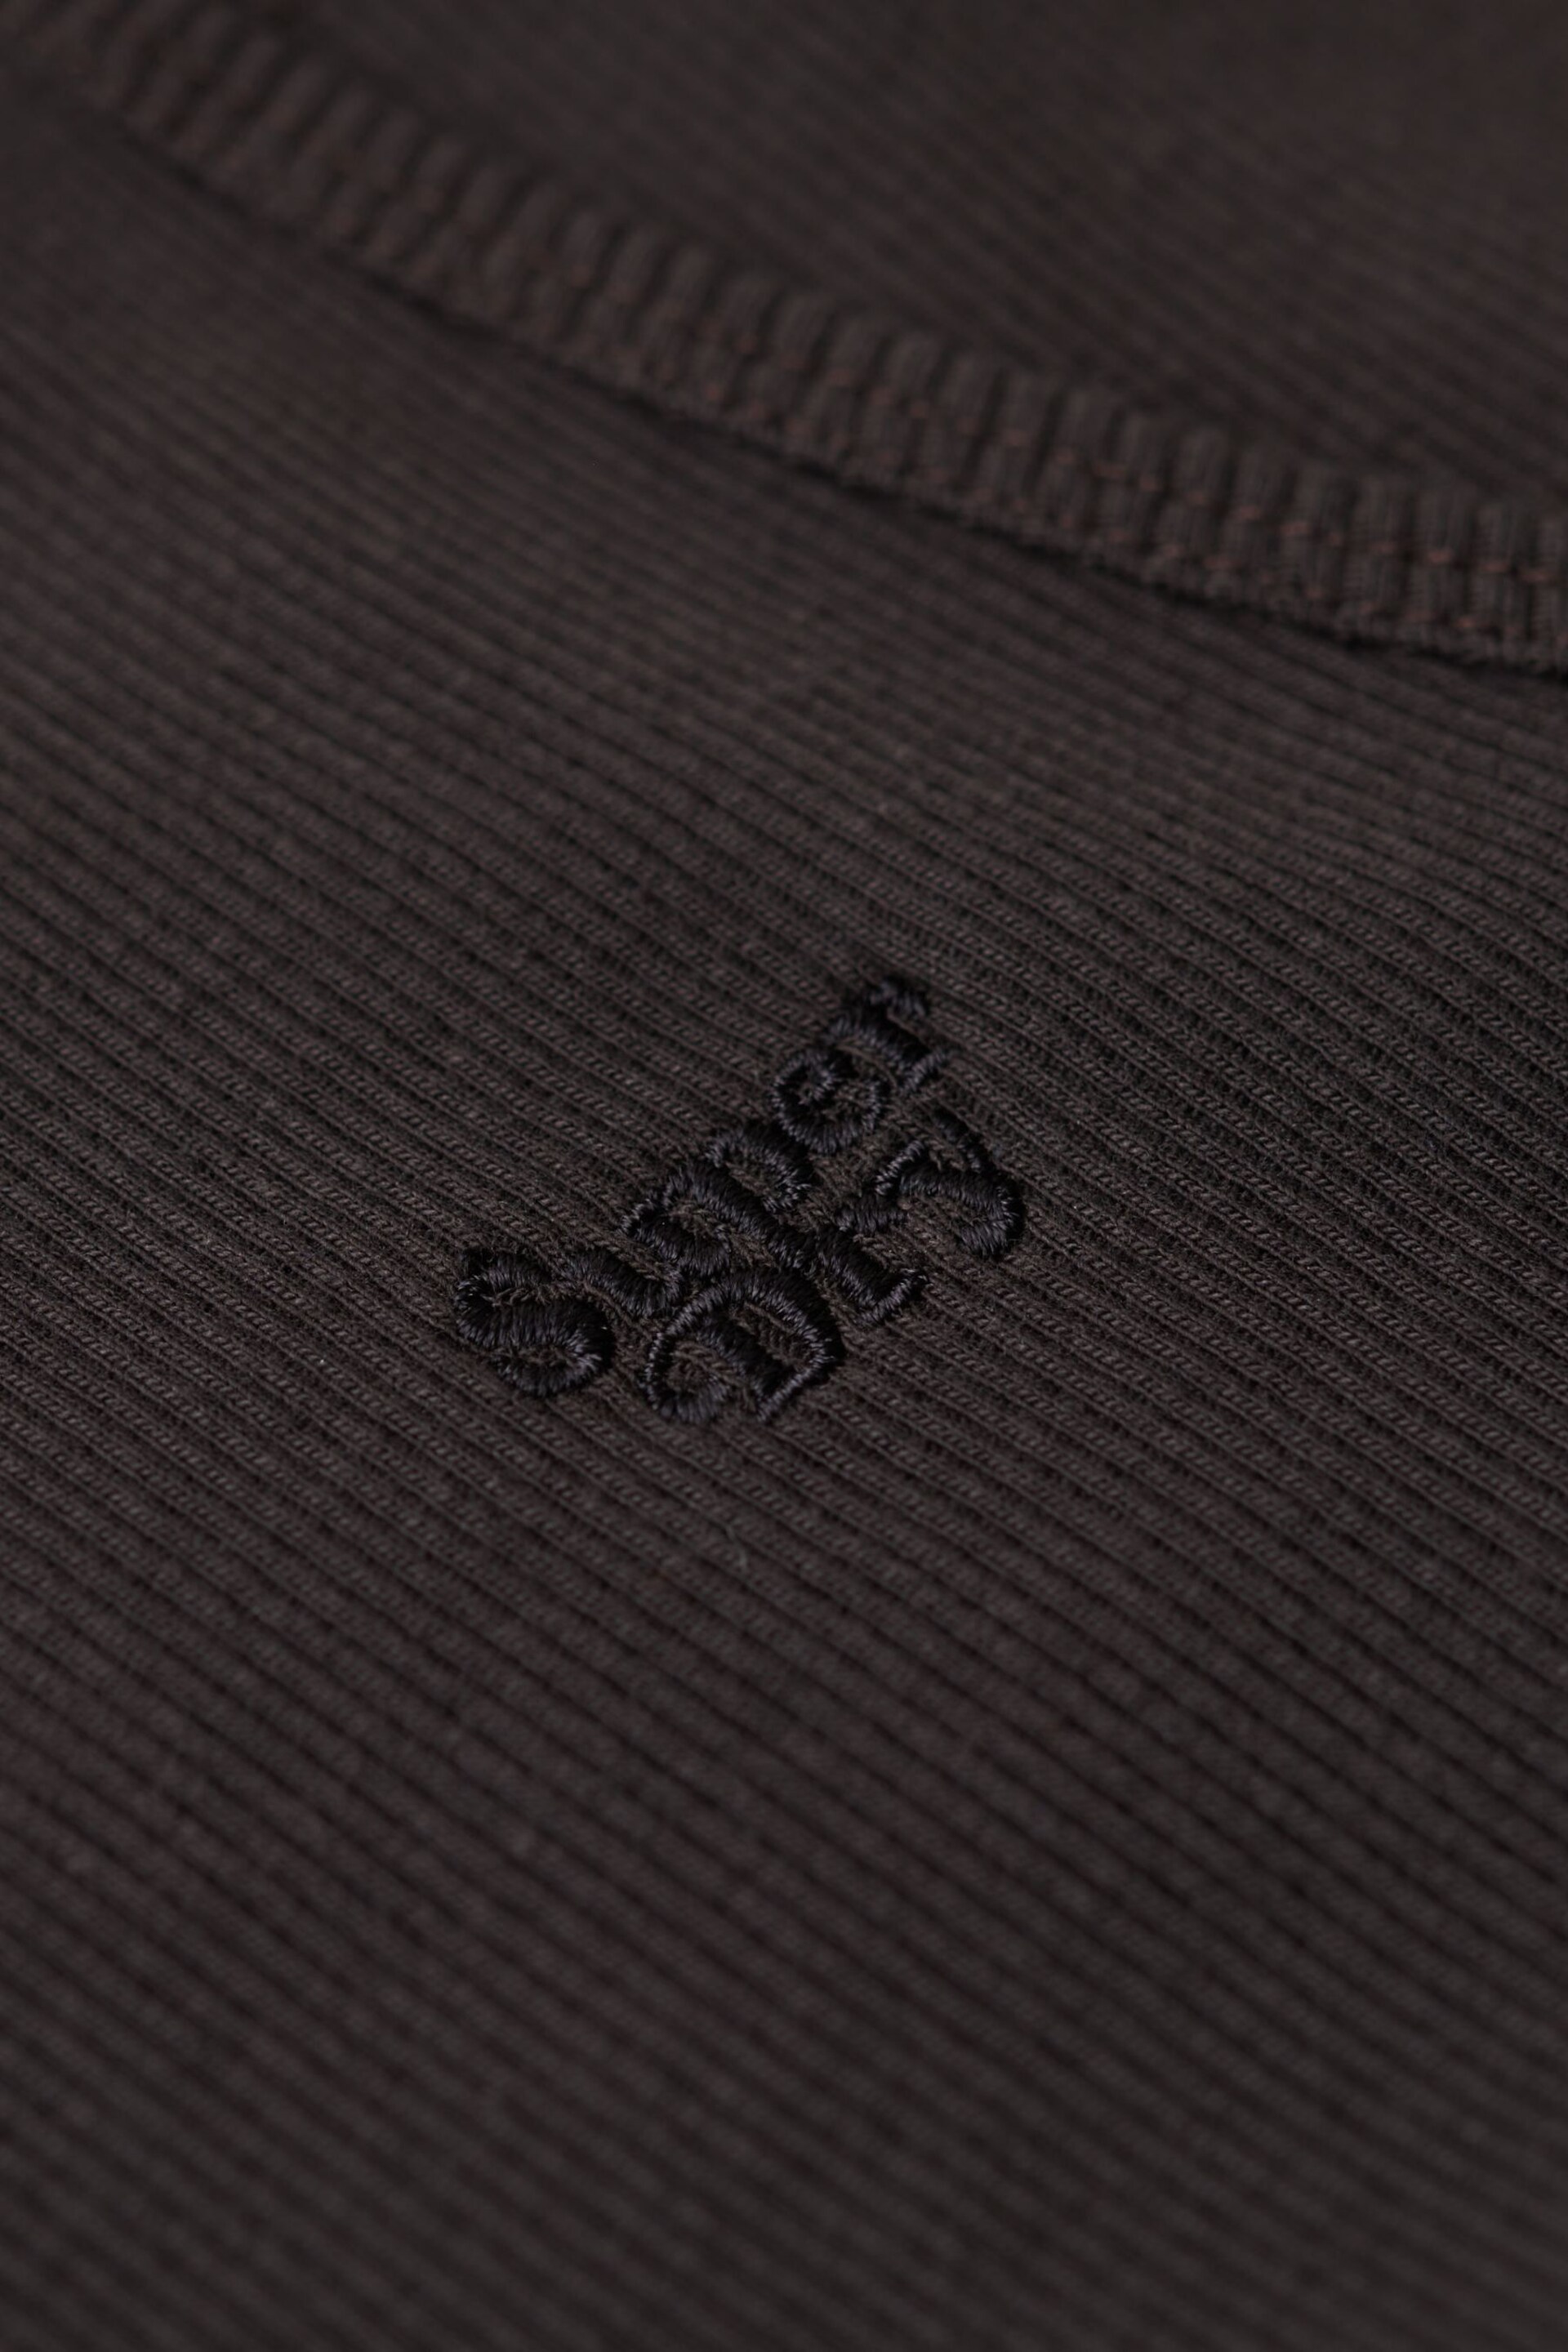 Superdry Black Essential Branded Cami Top - Image 6 of 6